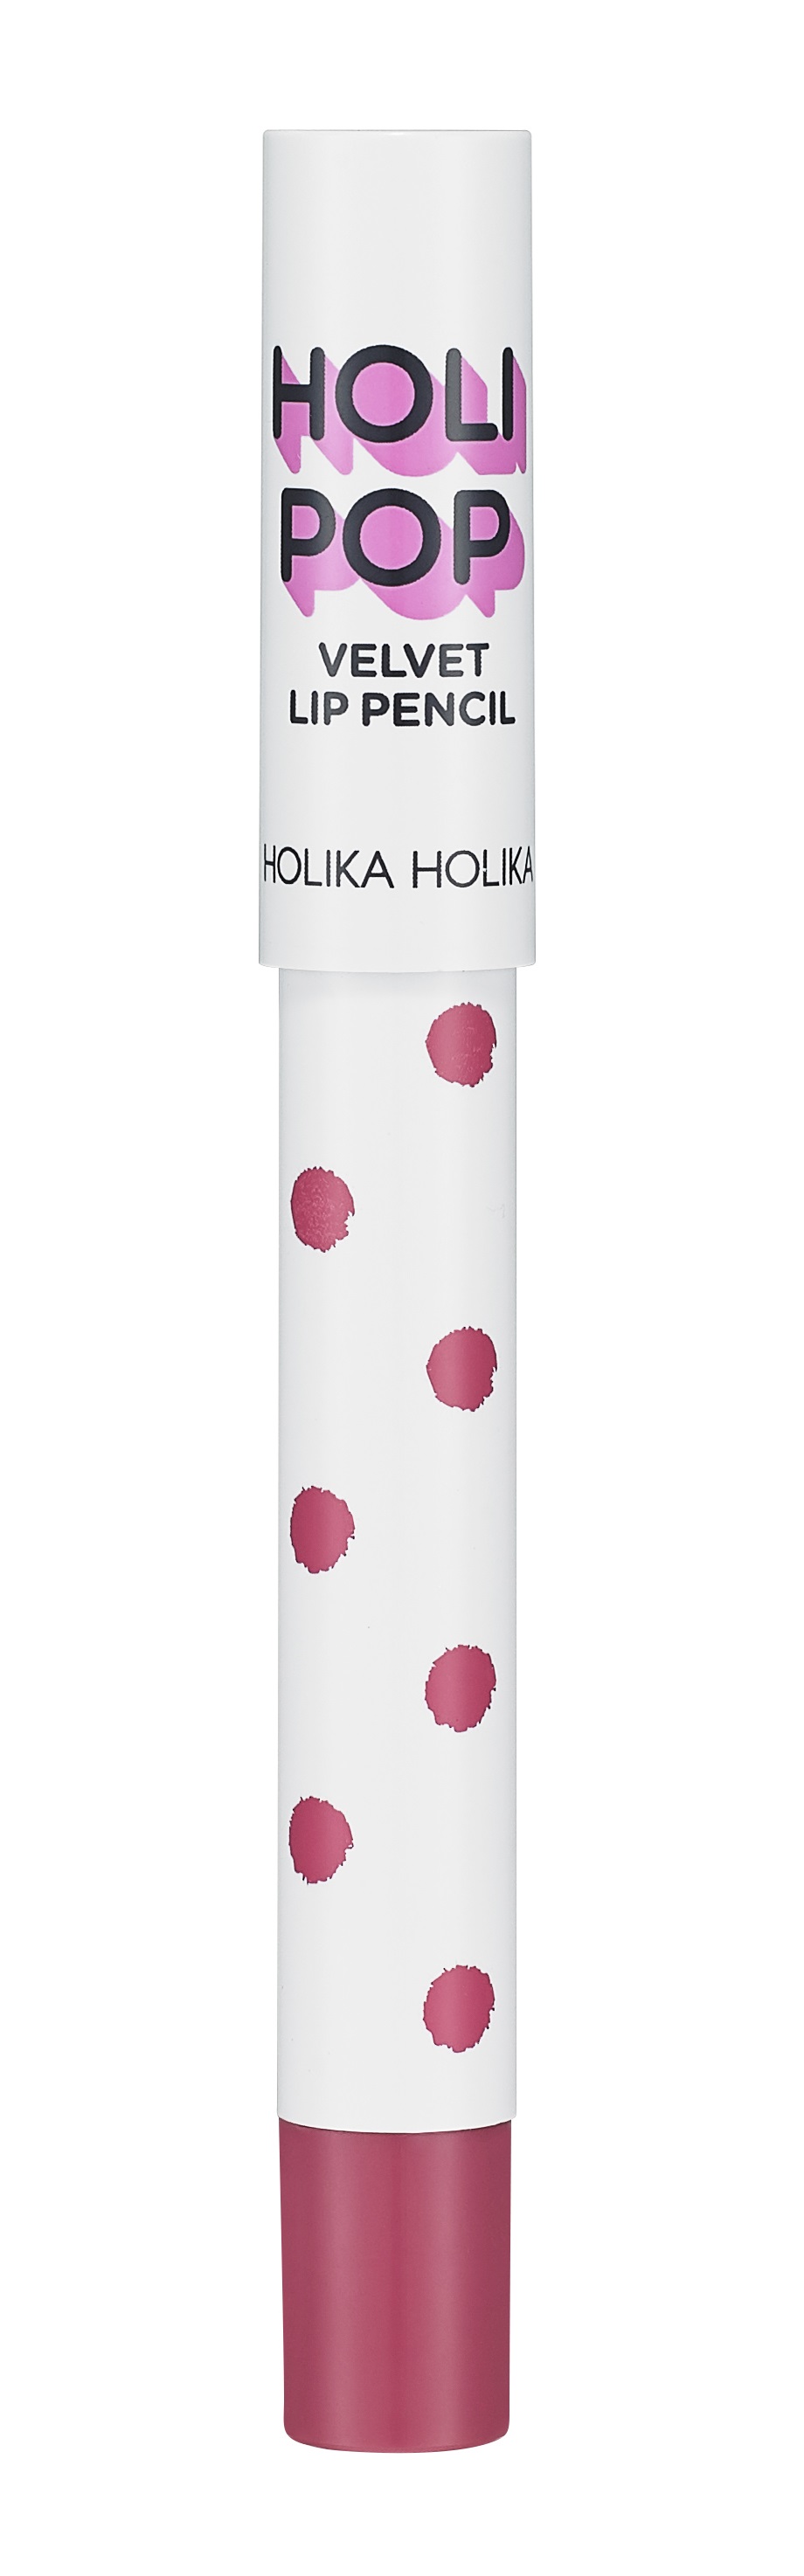 HOLIKA HOLIKA Карандаш матовый для губ Холипоп Вельвет, PK05 розовый / Holipop Velvet Lip Pencil PK05 rose 1,7 г